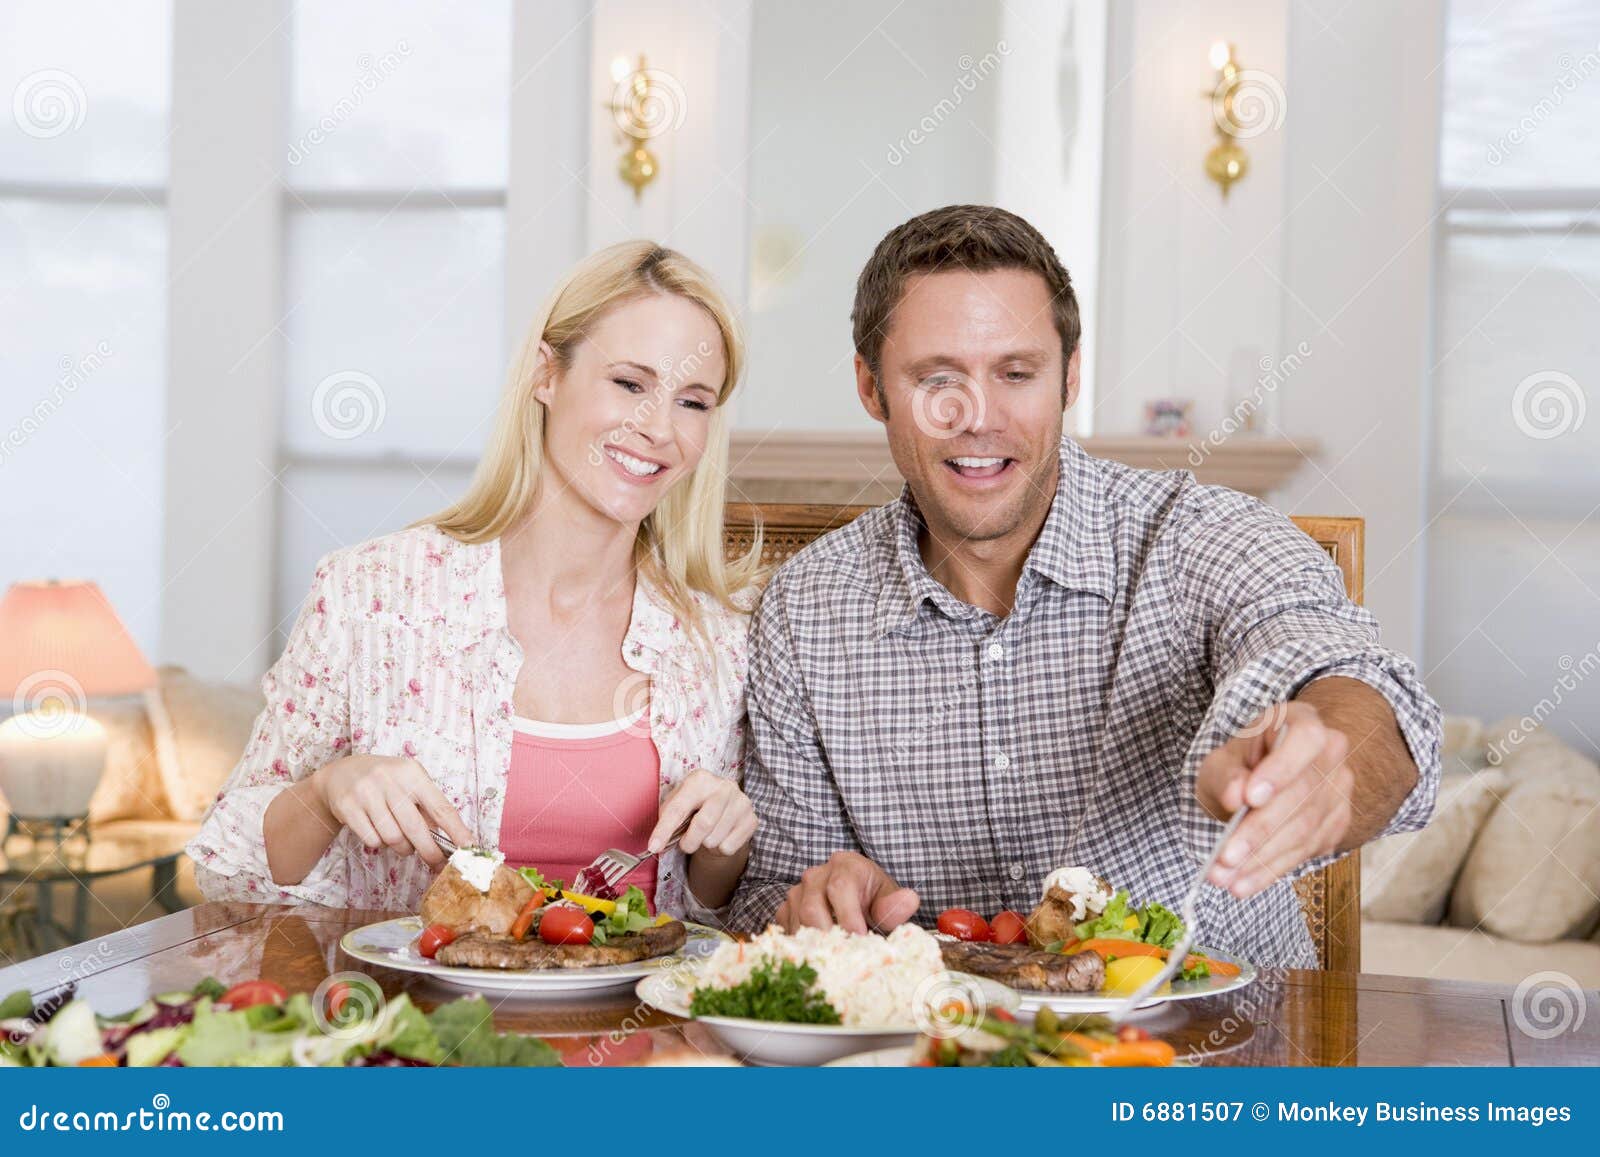 Обмен женами суть. Супруги за столом. Муж и жена ужинают. Муж и жена на кухне за столом. Мужчина за столом дома.